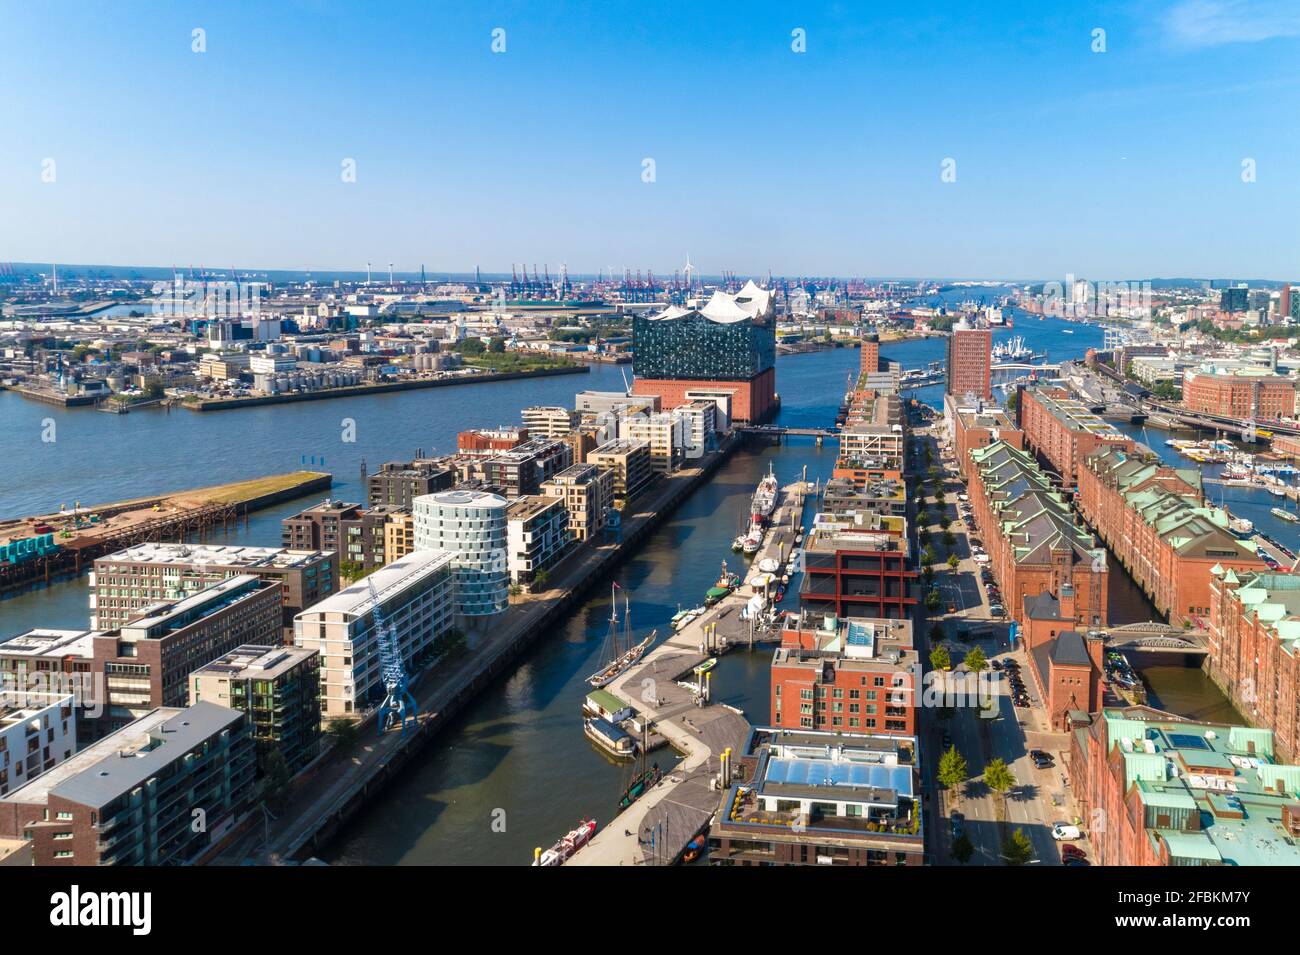 Cityscape with Hafencity, Speicherstadt and Elbphilharmonie, Hamburg, Germany Stock Photo